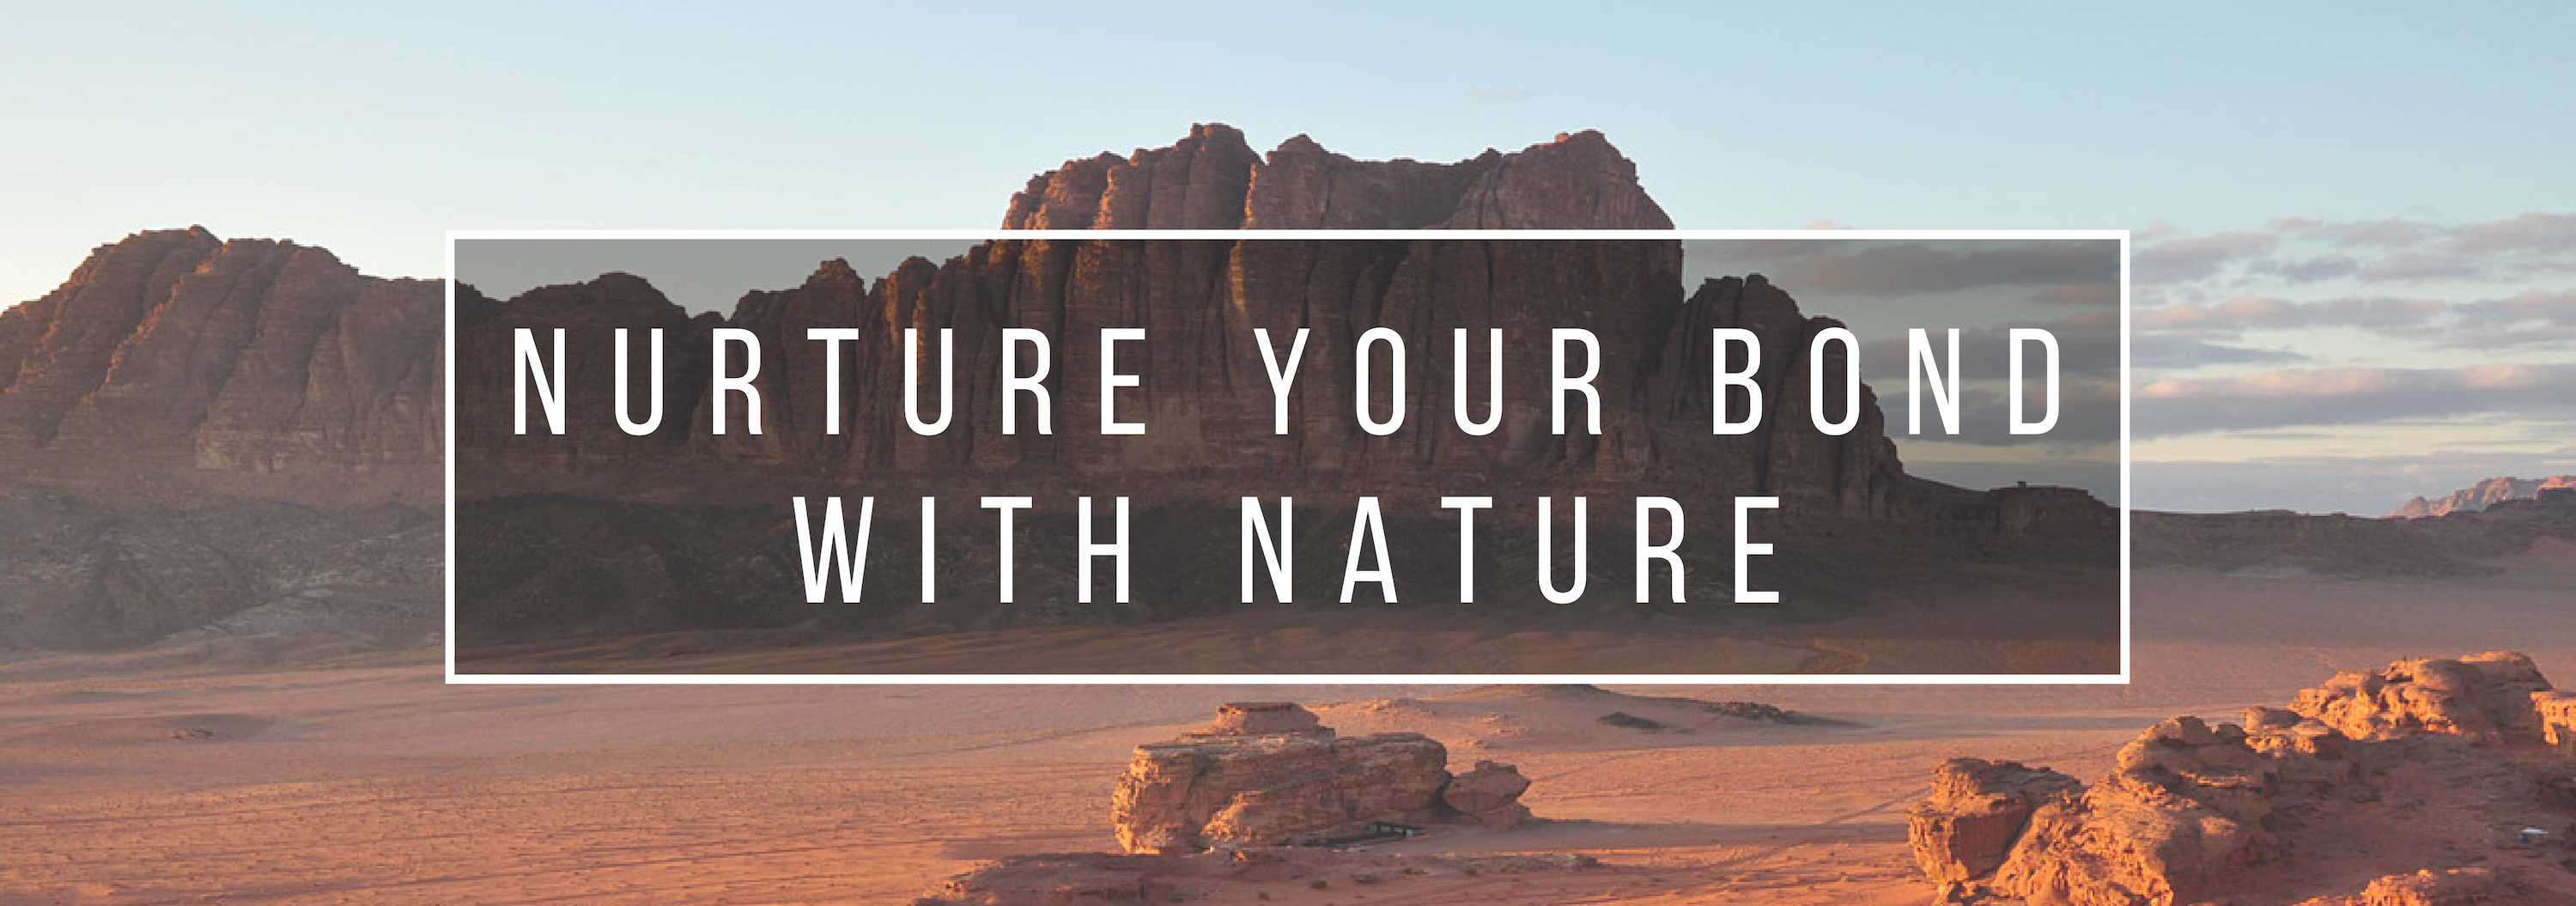 Nurture your bond with nature